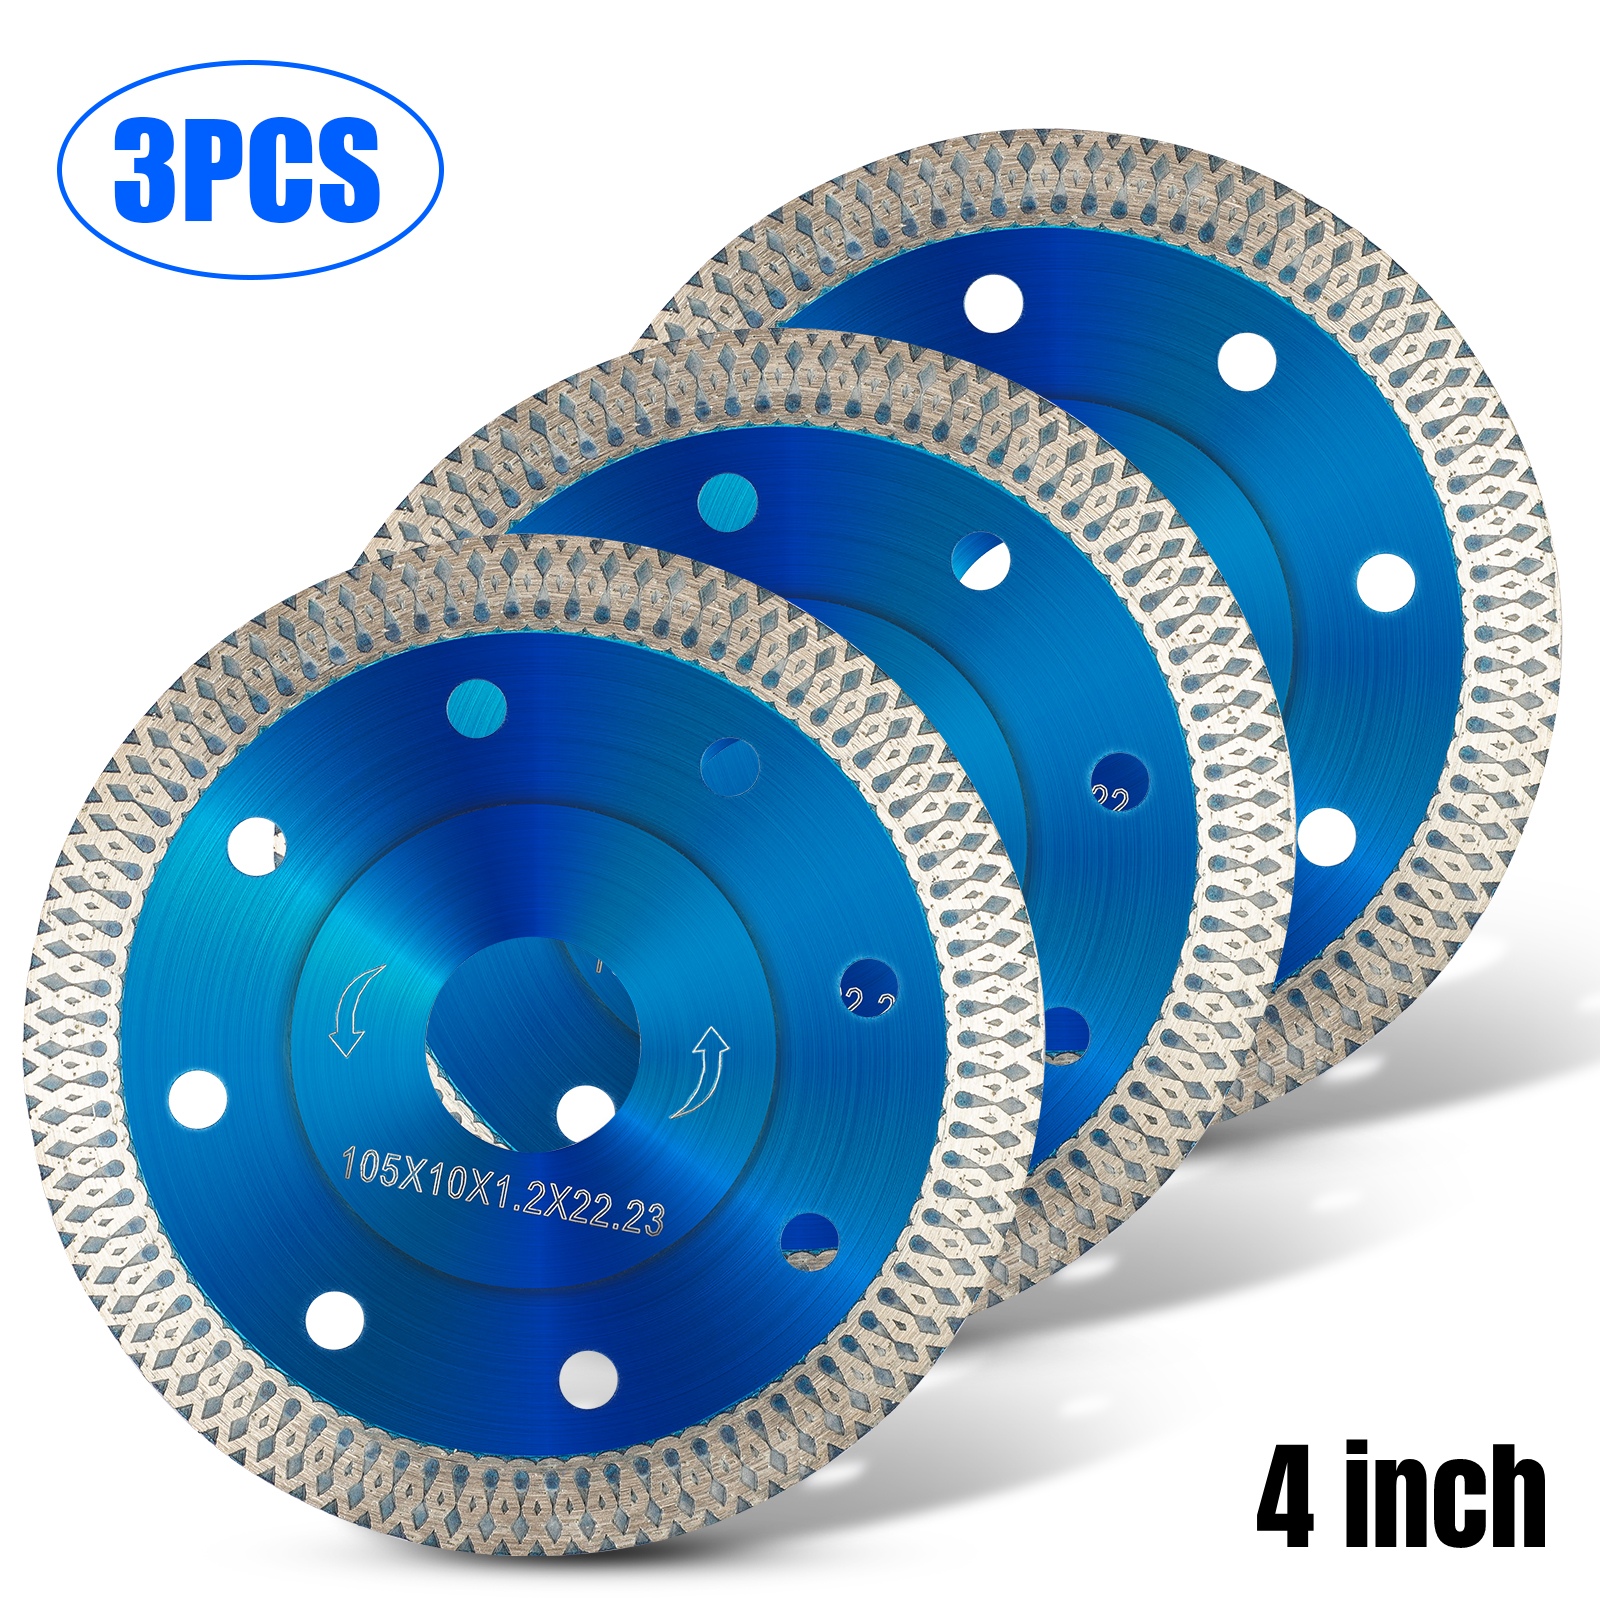 Porcelain Tile Turbo Thin Diamond Dry Cutting Blade/Disc Grinder Wheel Useful